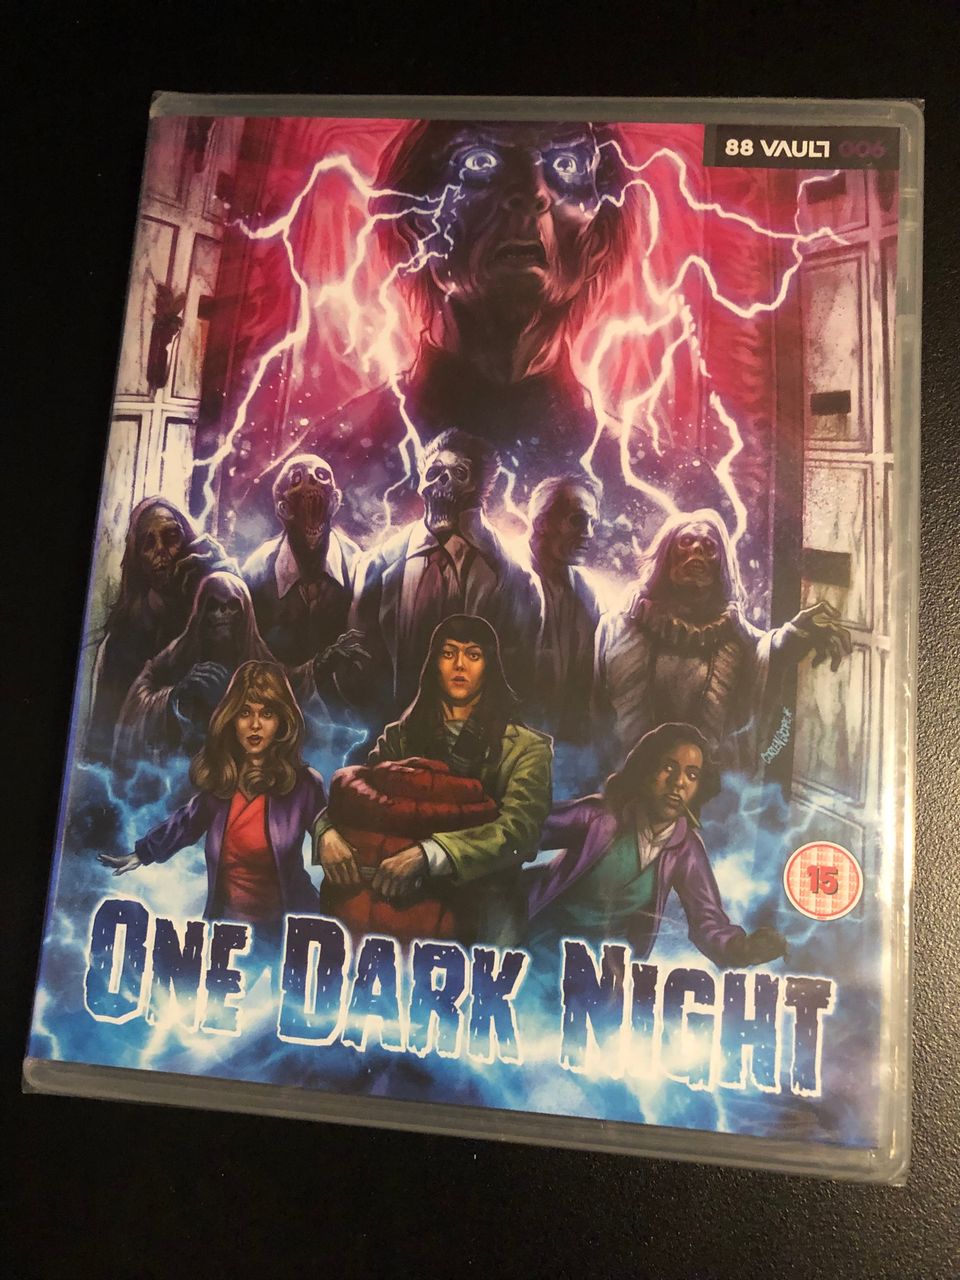 One Dark Night blu-ray / 88 Films